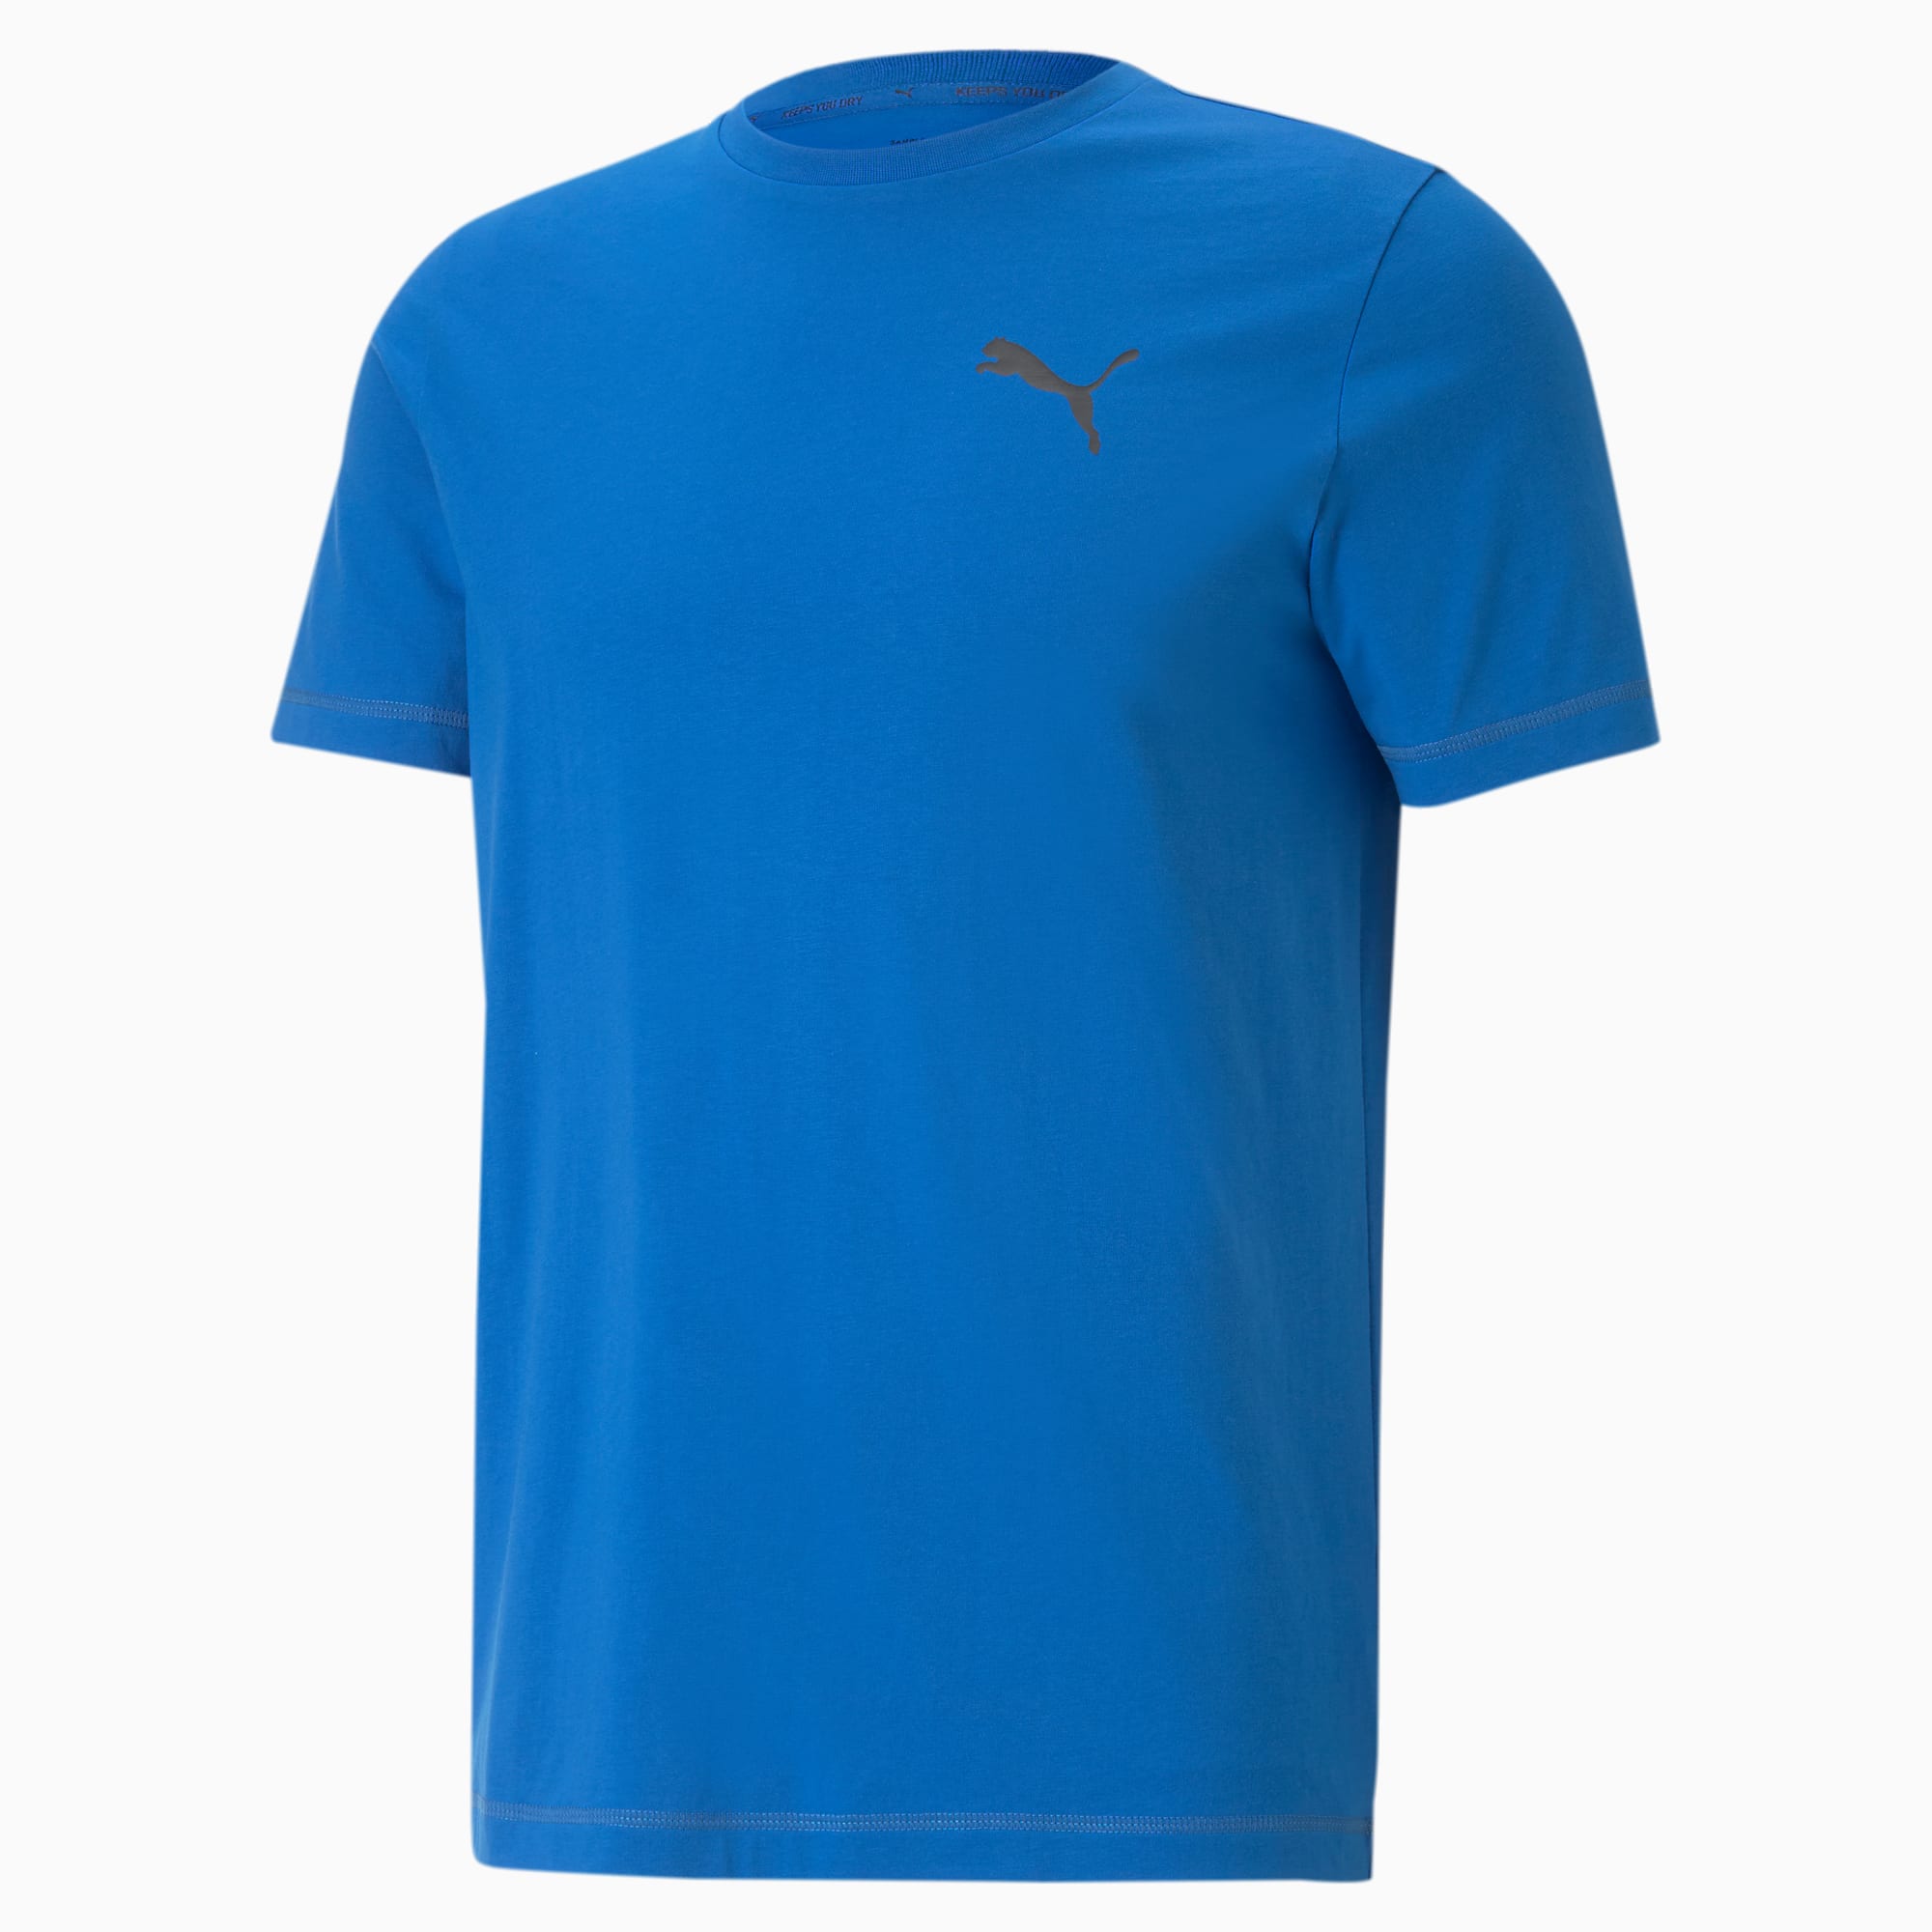 PUMA Active Soft Men's T-Shirt, Royal Blue, Size 4XL, Clothing